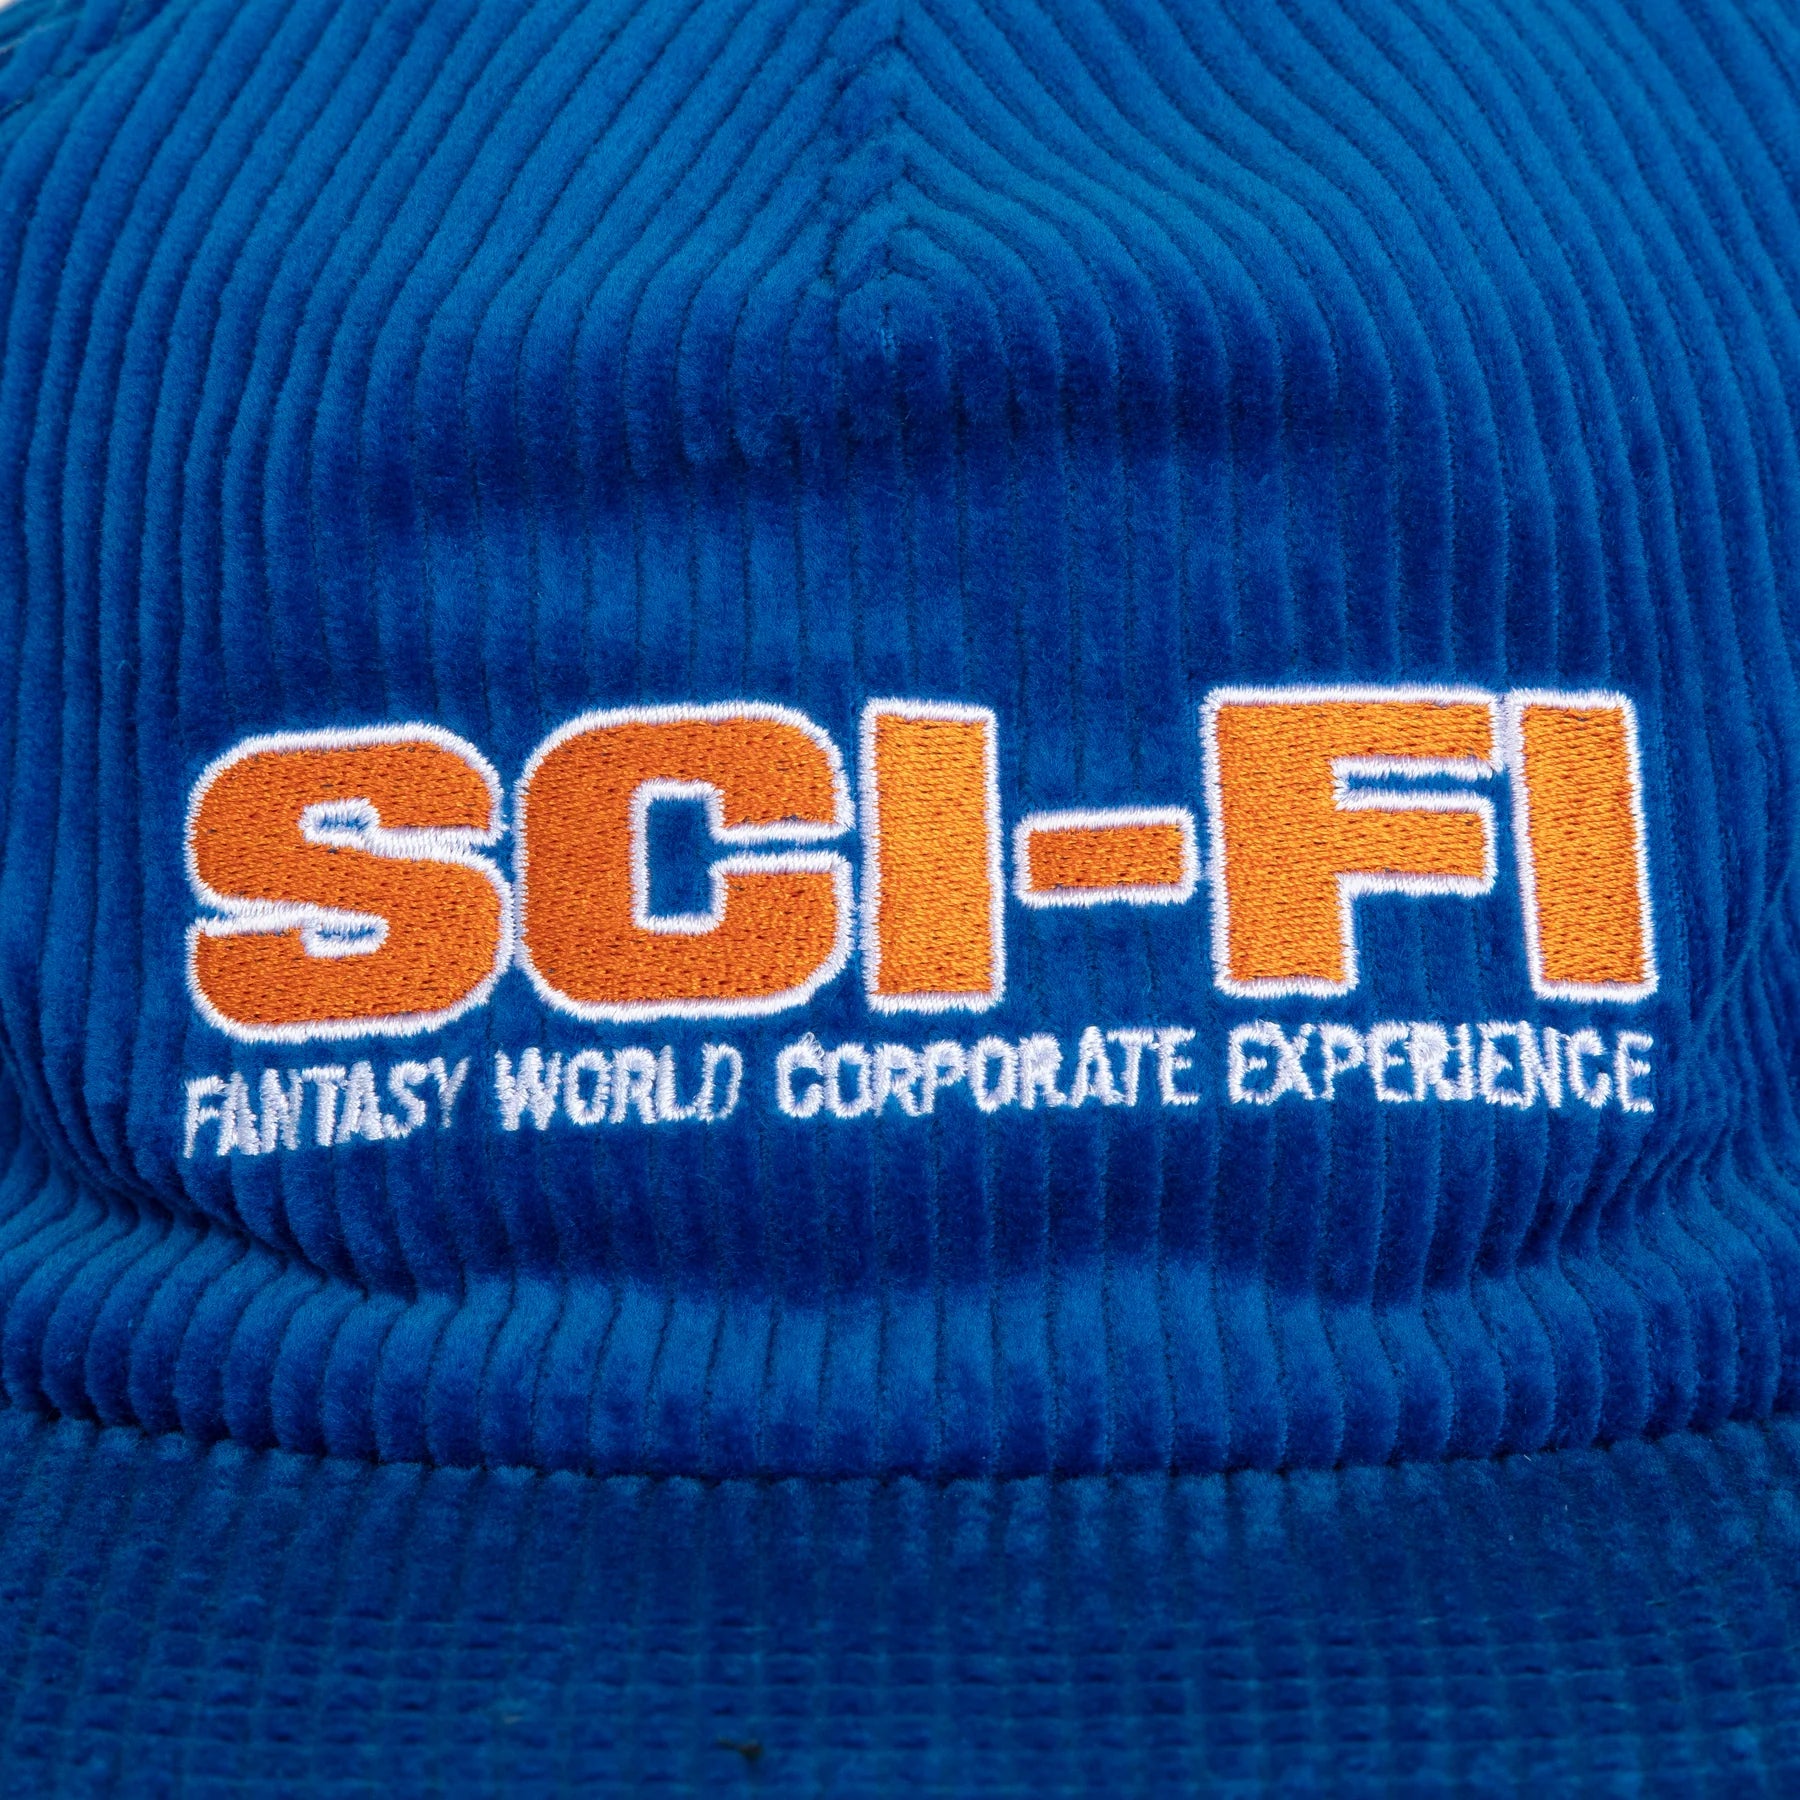 Sci-Fi Fantasy Corporate Experience Blue Cord Cap